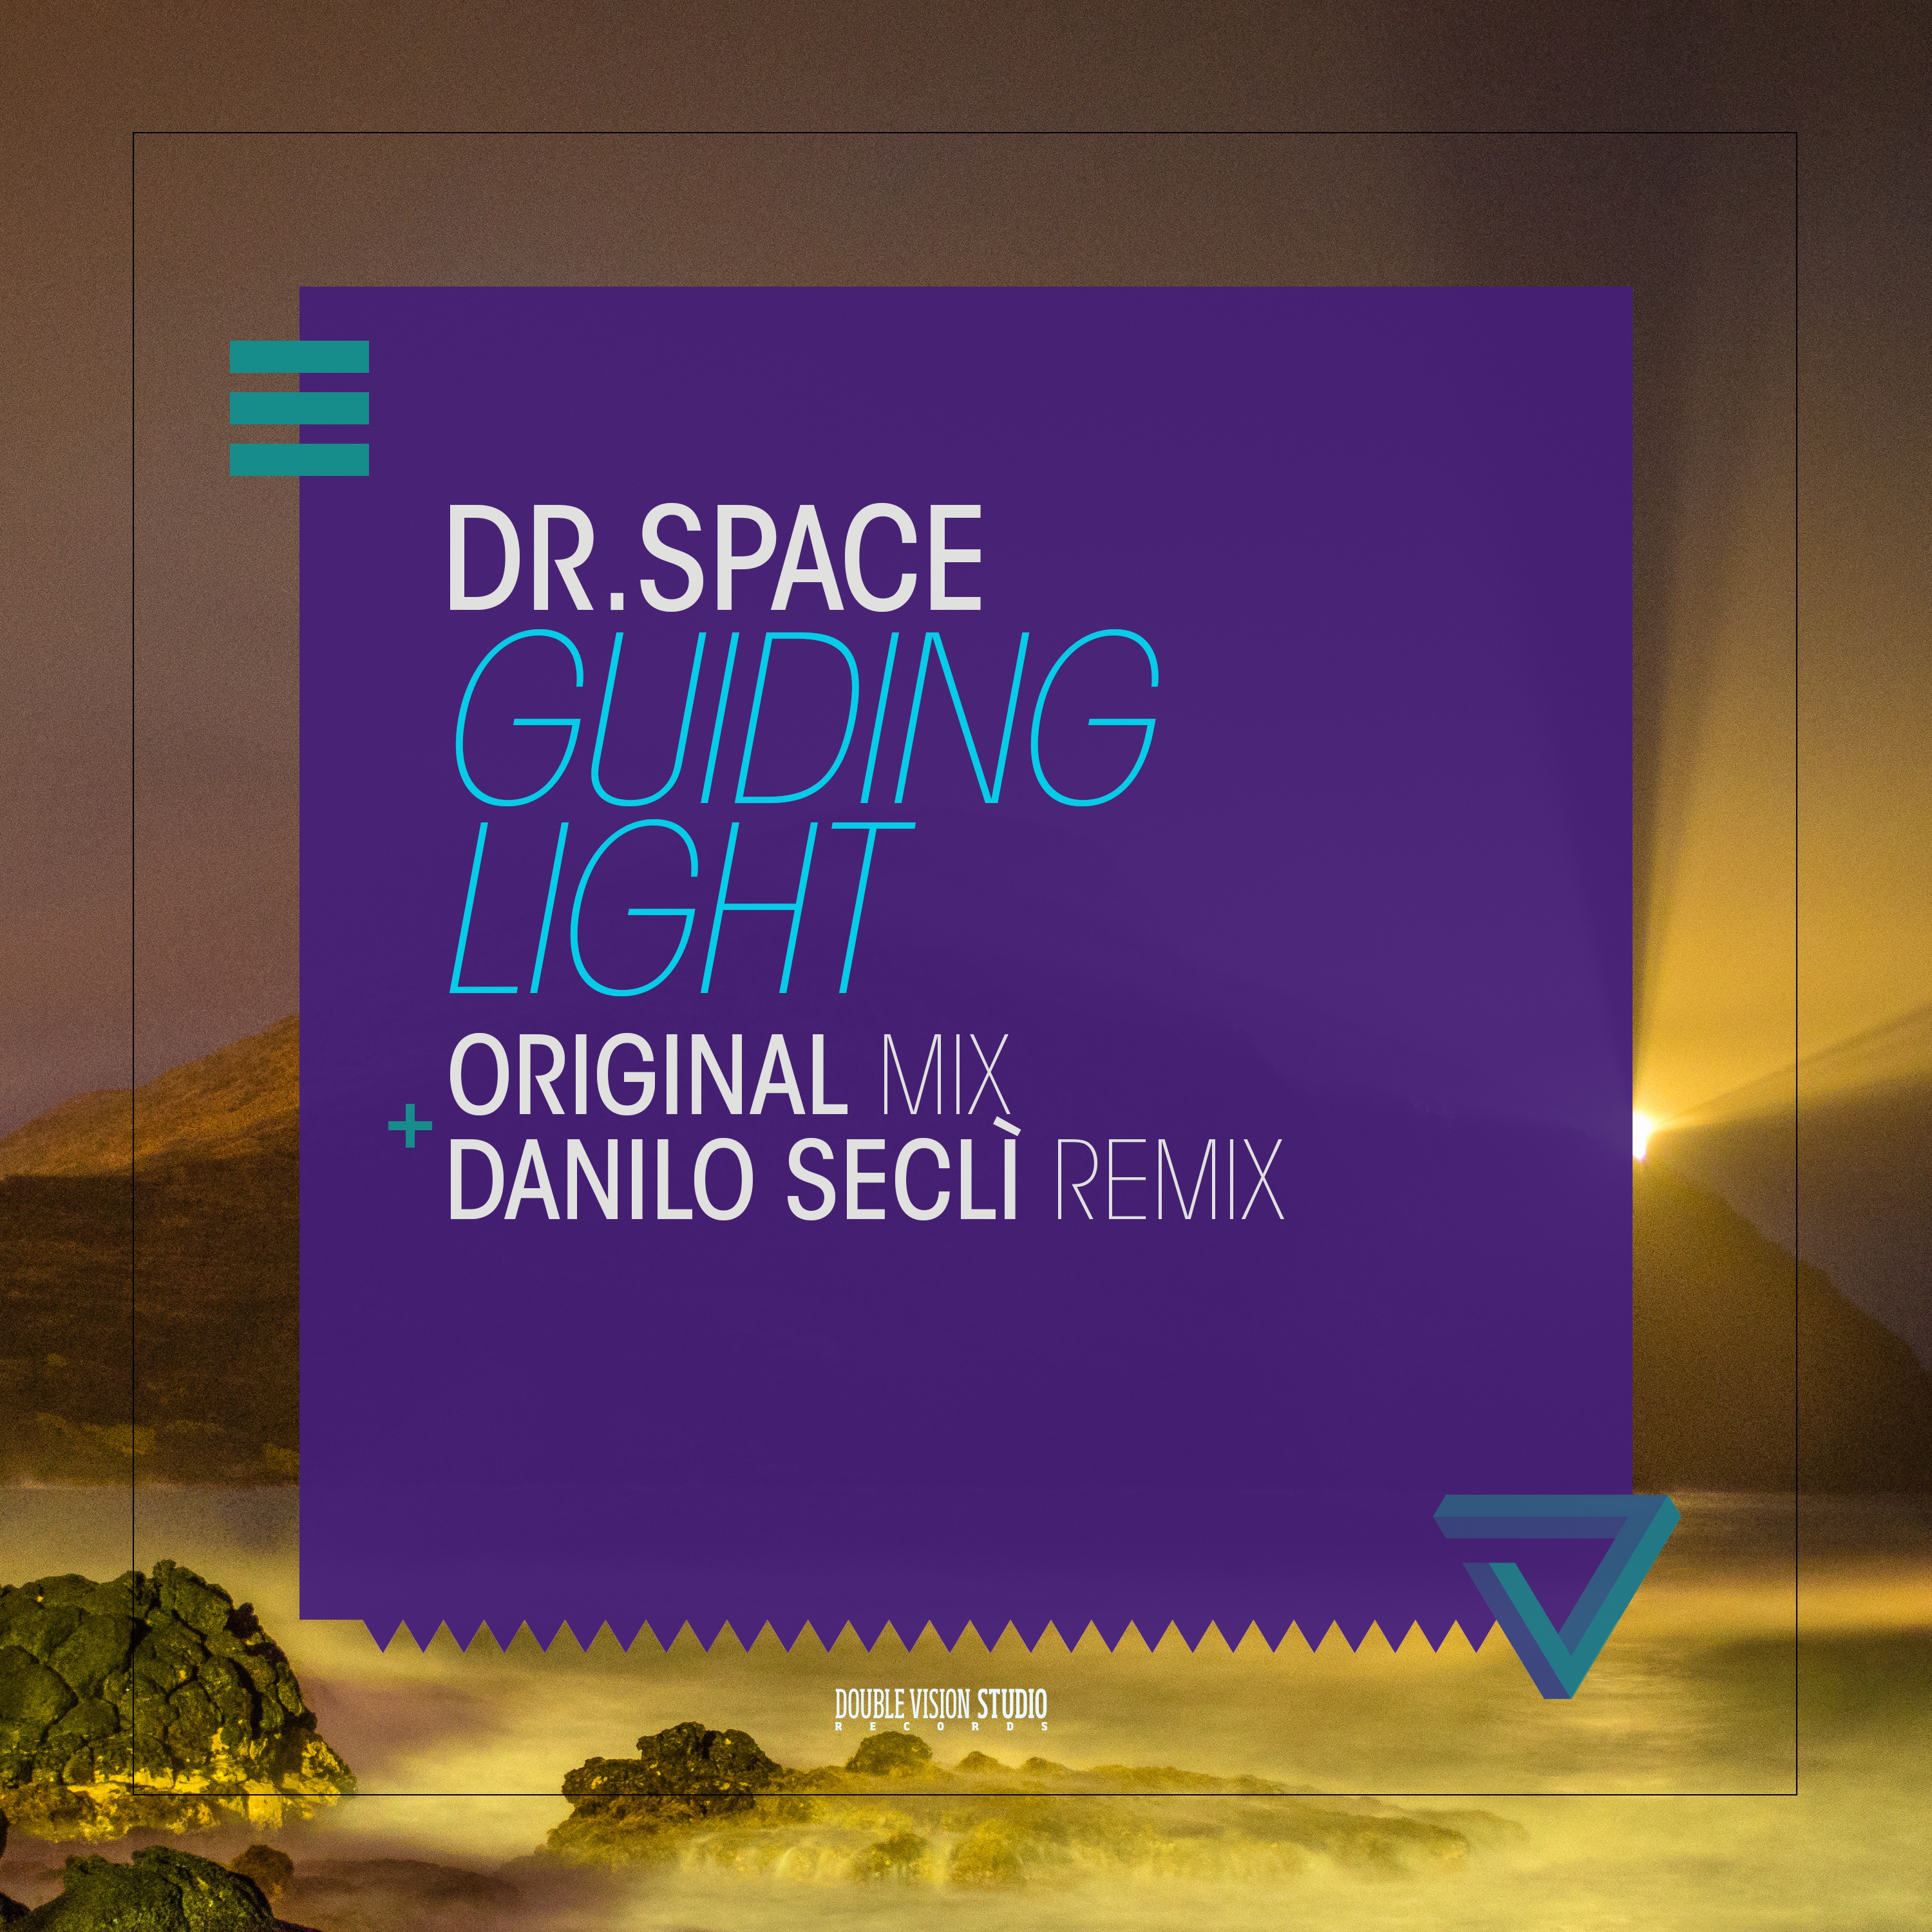 Guiding Light Danilo Secli Remix